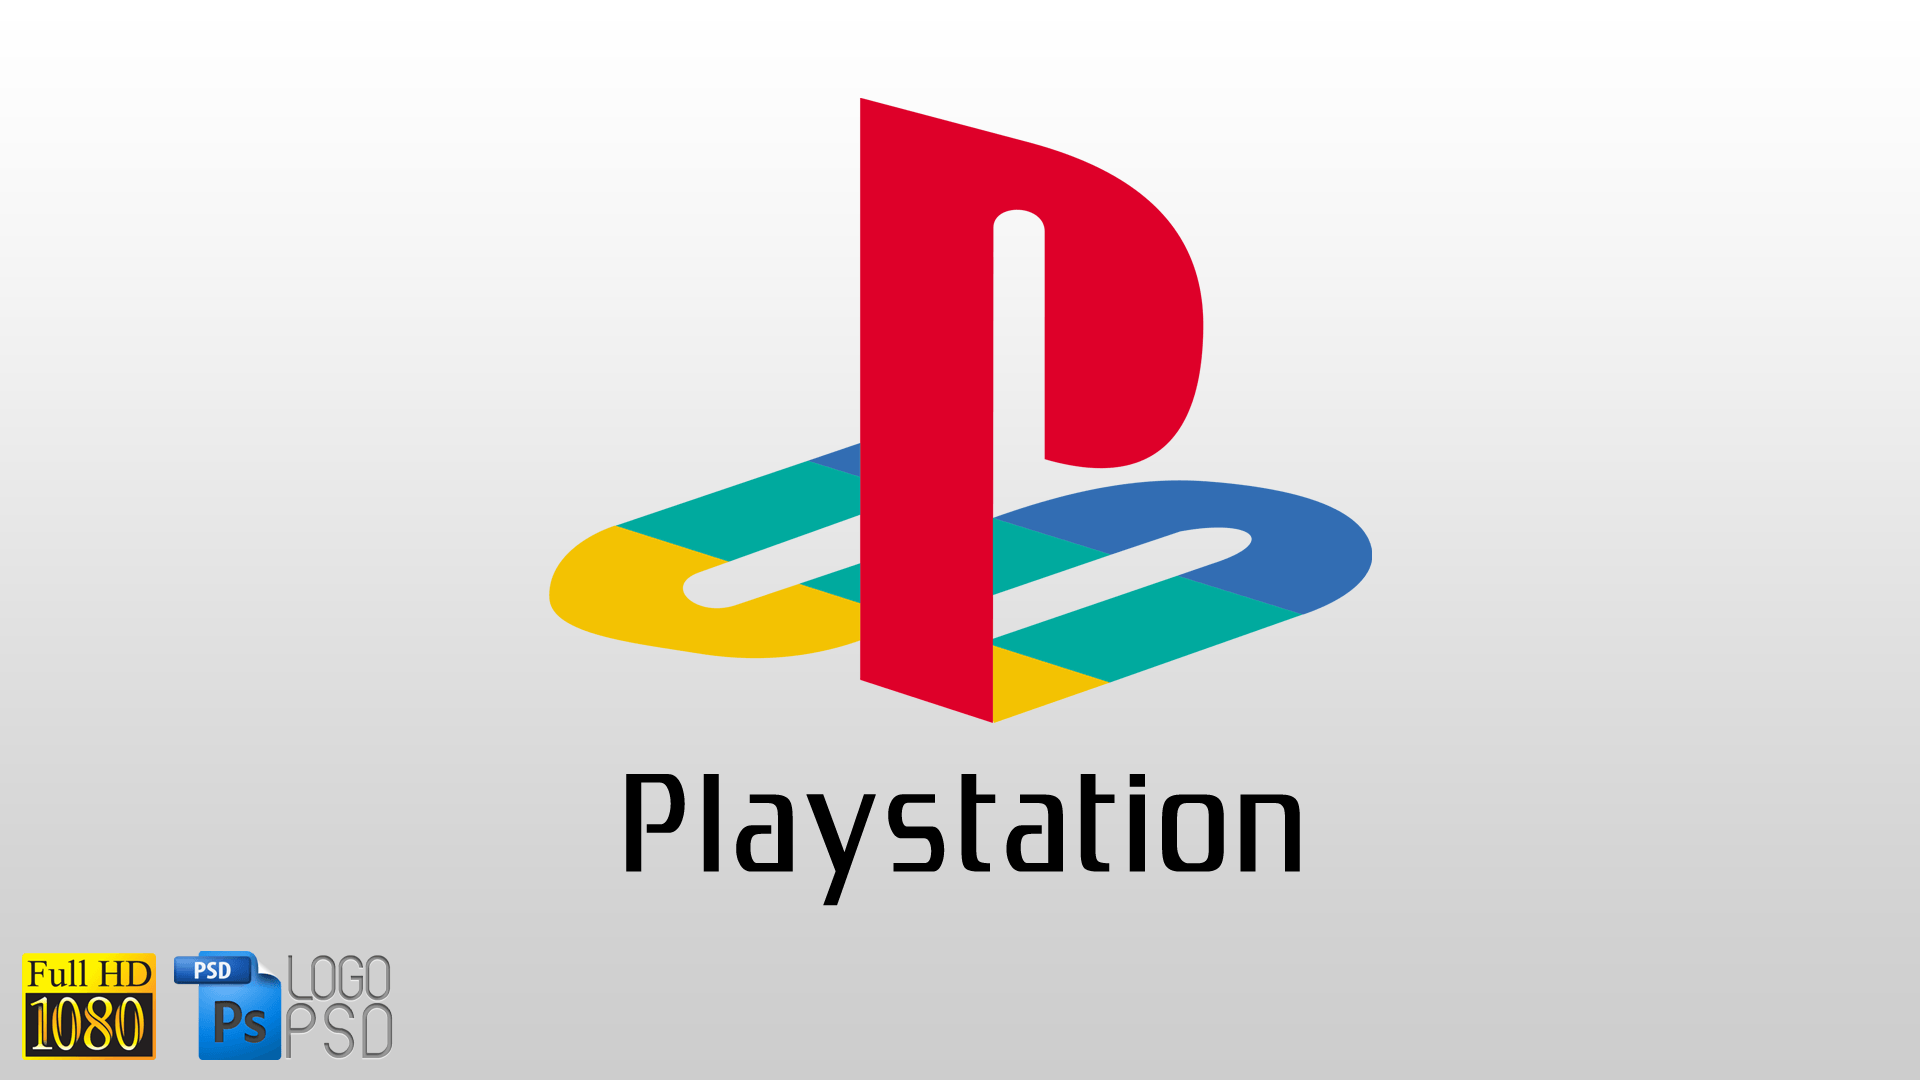 Playstation Logo Wallpaper HD Background